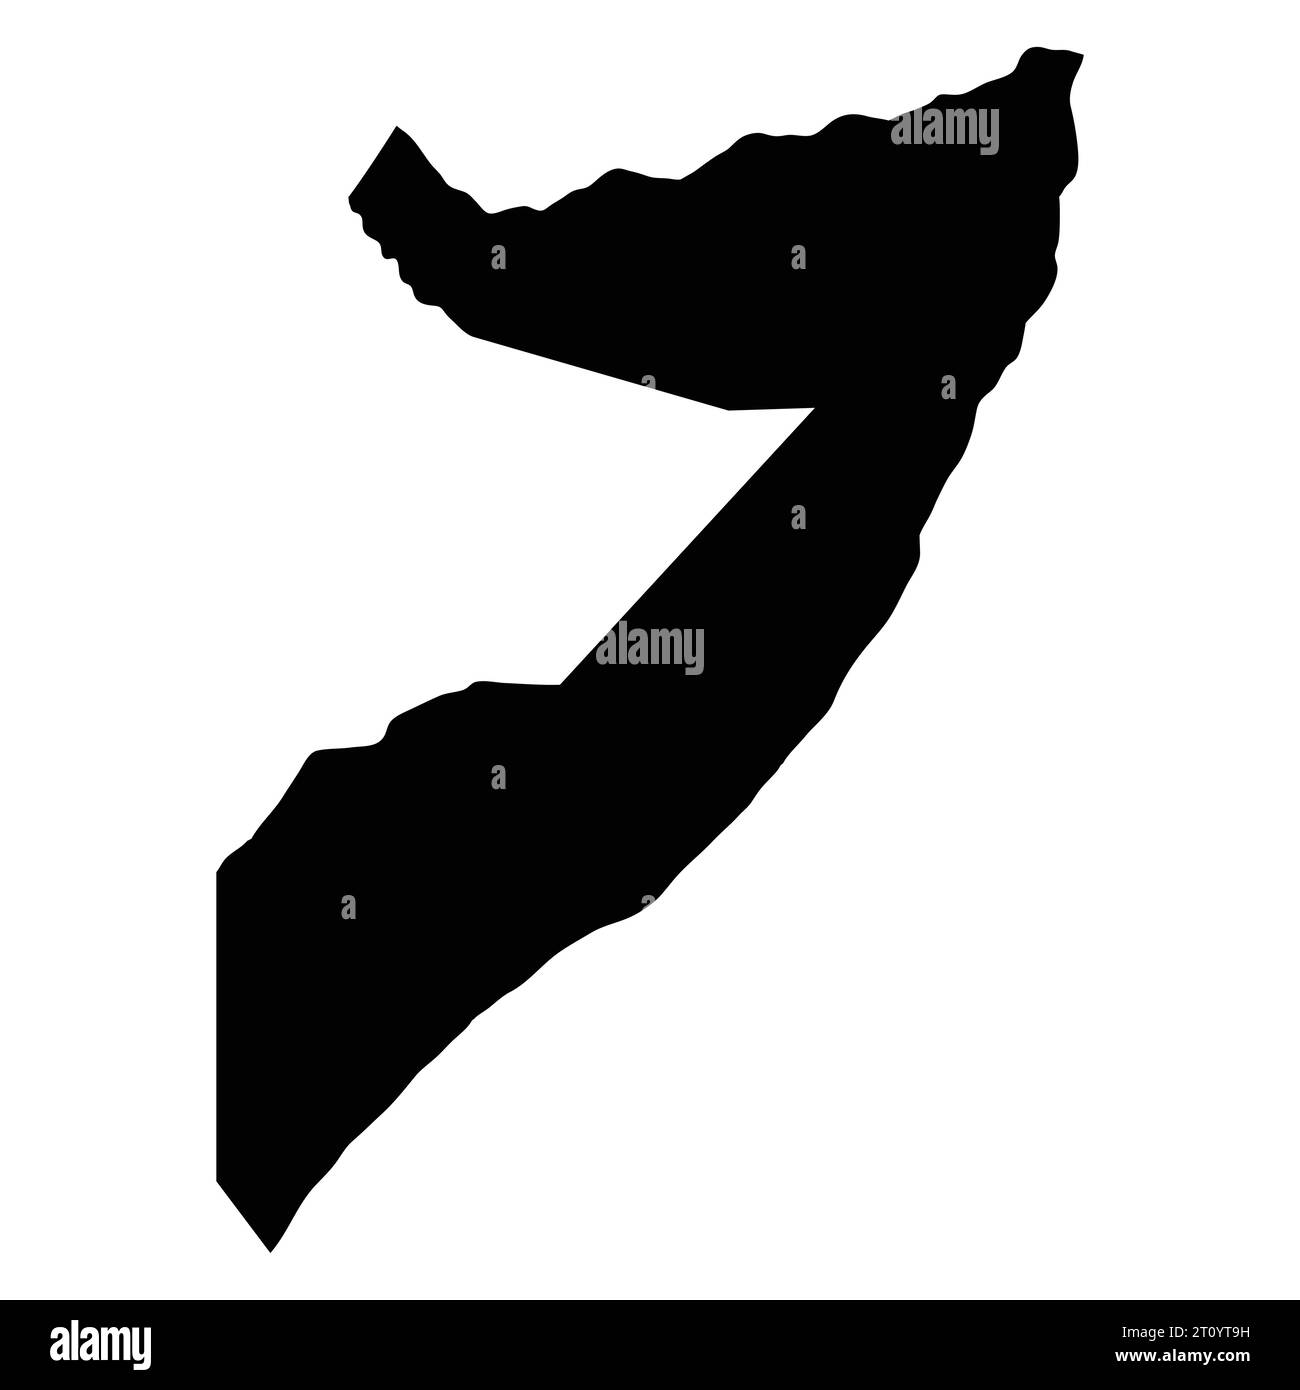 Somalia island map silhouette region territory, black shape style illustration Stock Vector